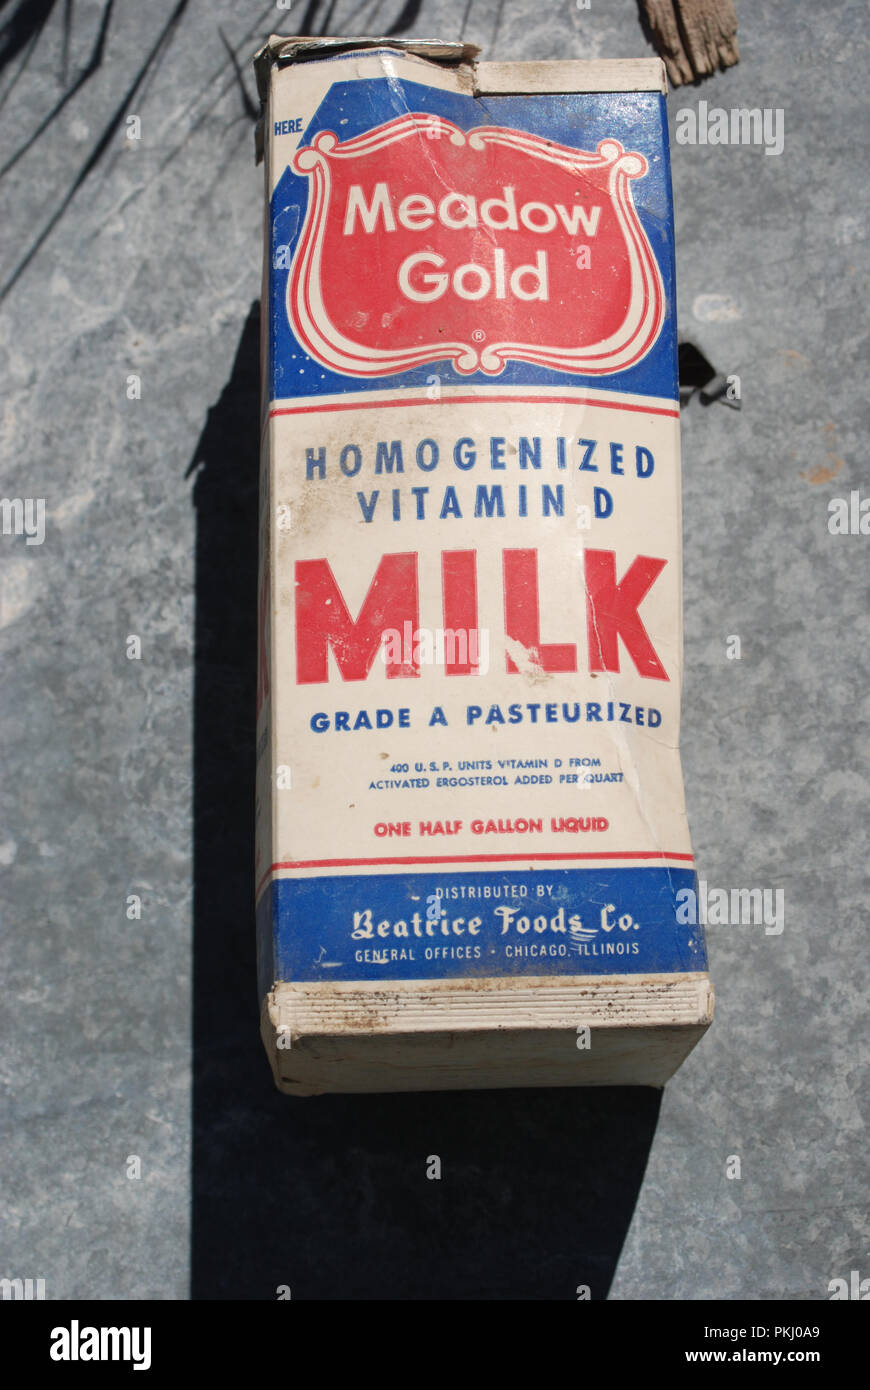 Vintage Meadow Gold milk carton Stock Photo - Alamy